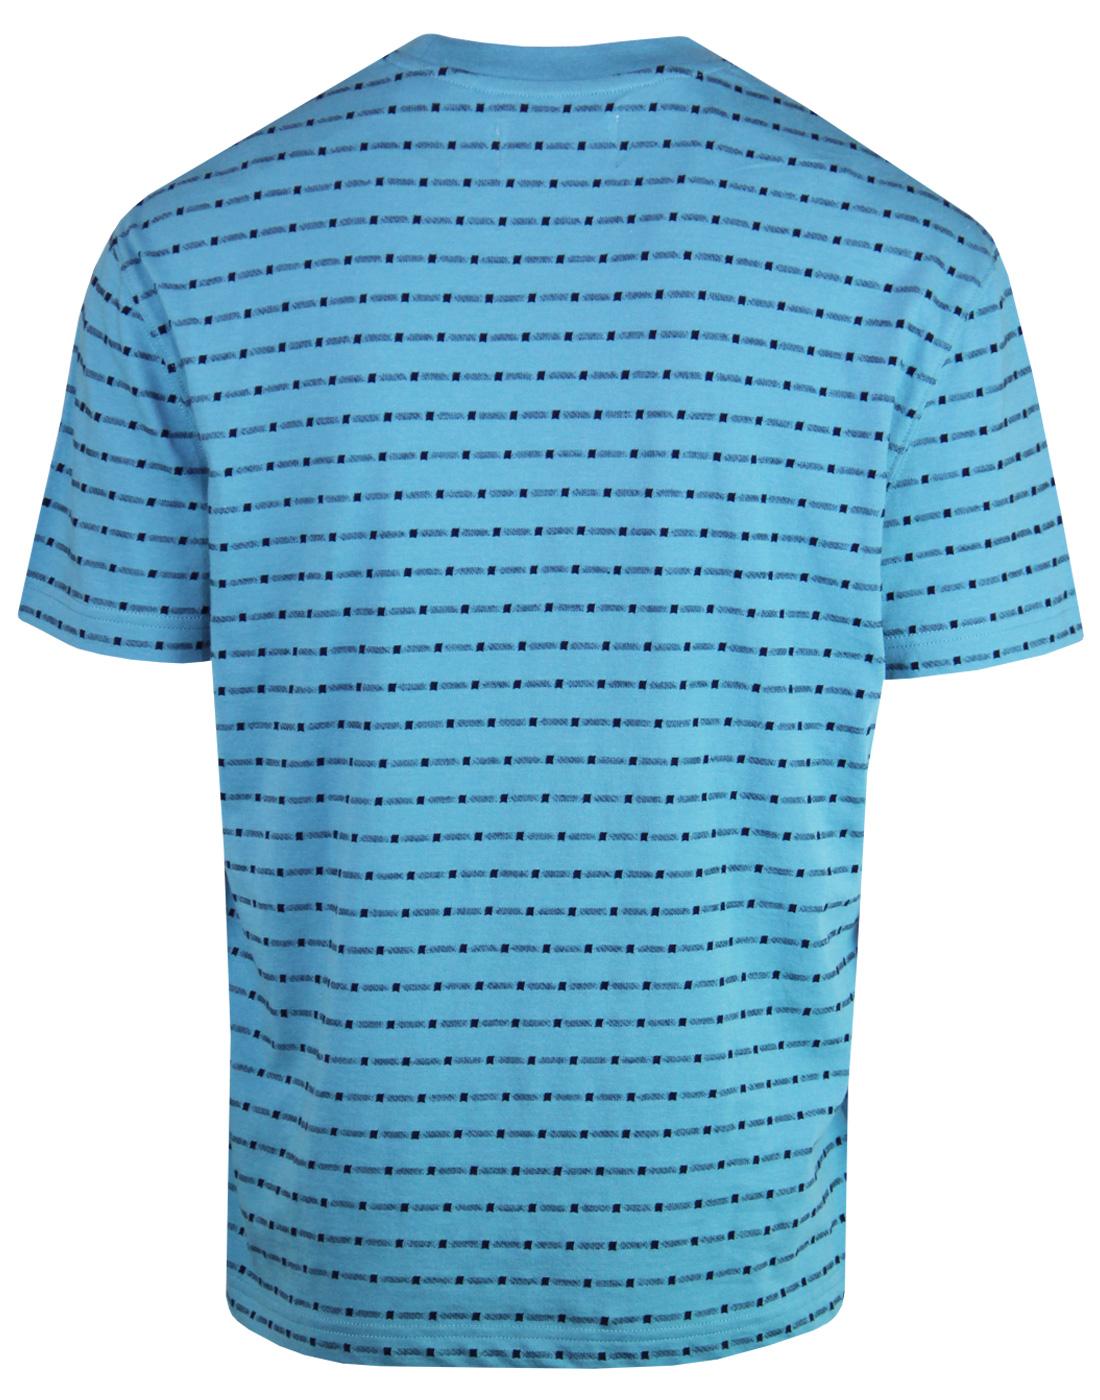 ORIGINAL PENGUIN Men's Retro 8 Bit Jacquard Stripe T-shirt